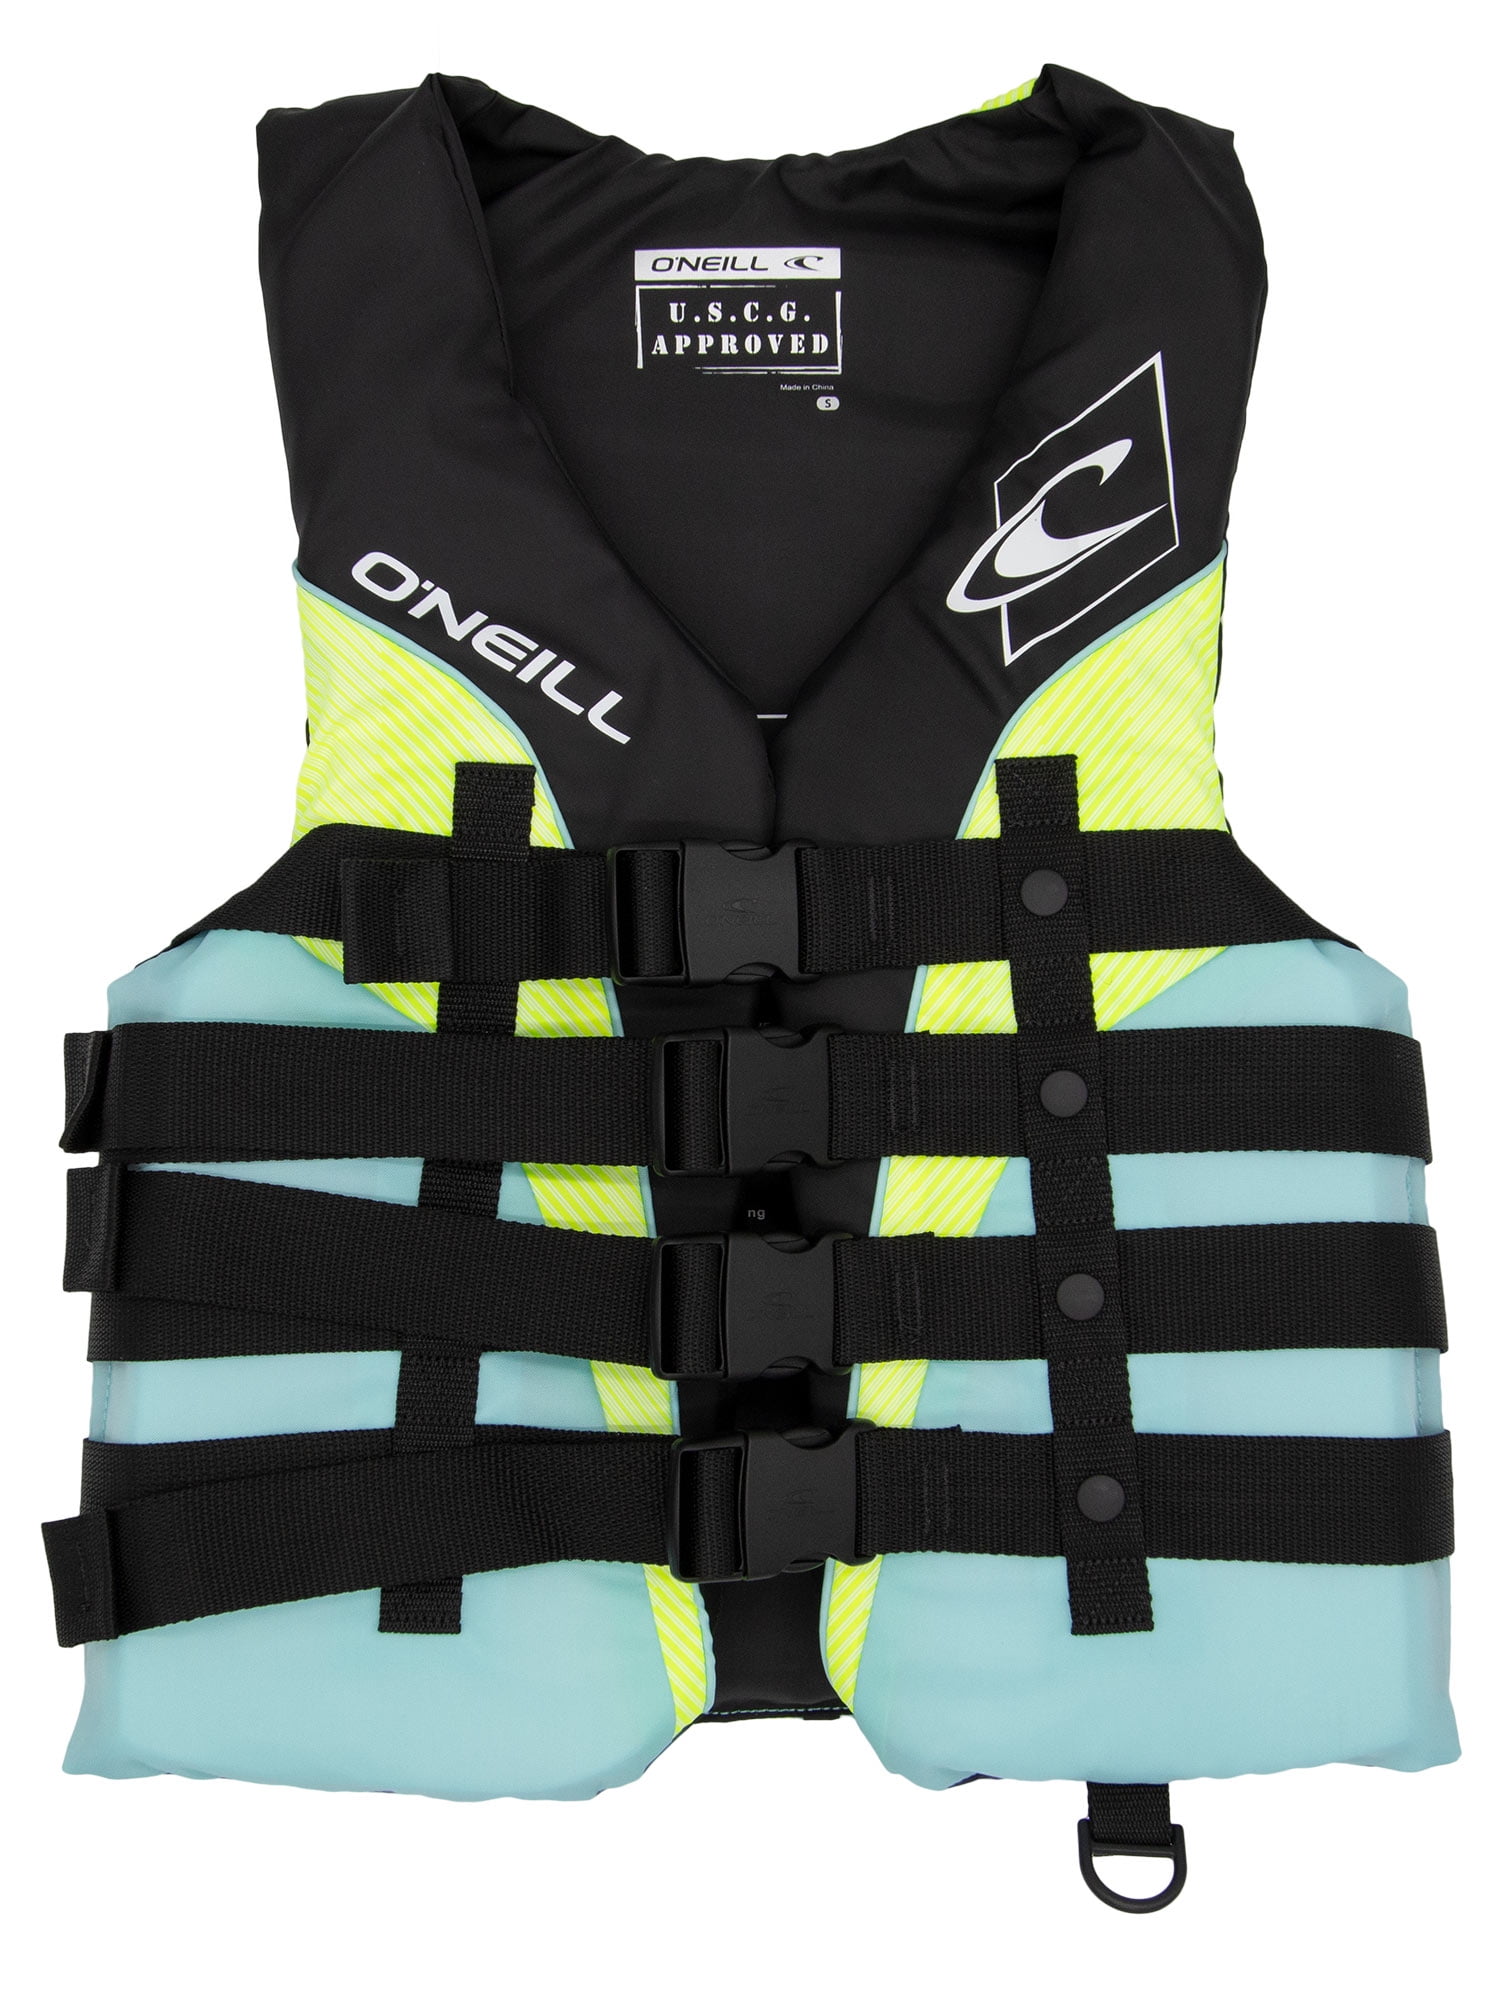 O'Neill mens Superlite USCG life vest 3XL Black/turquoise/lime (4723)